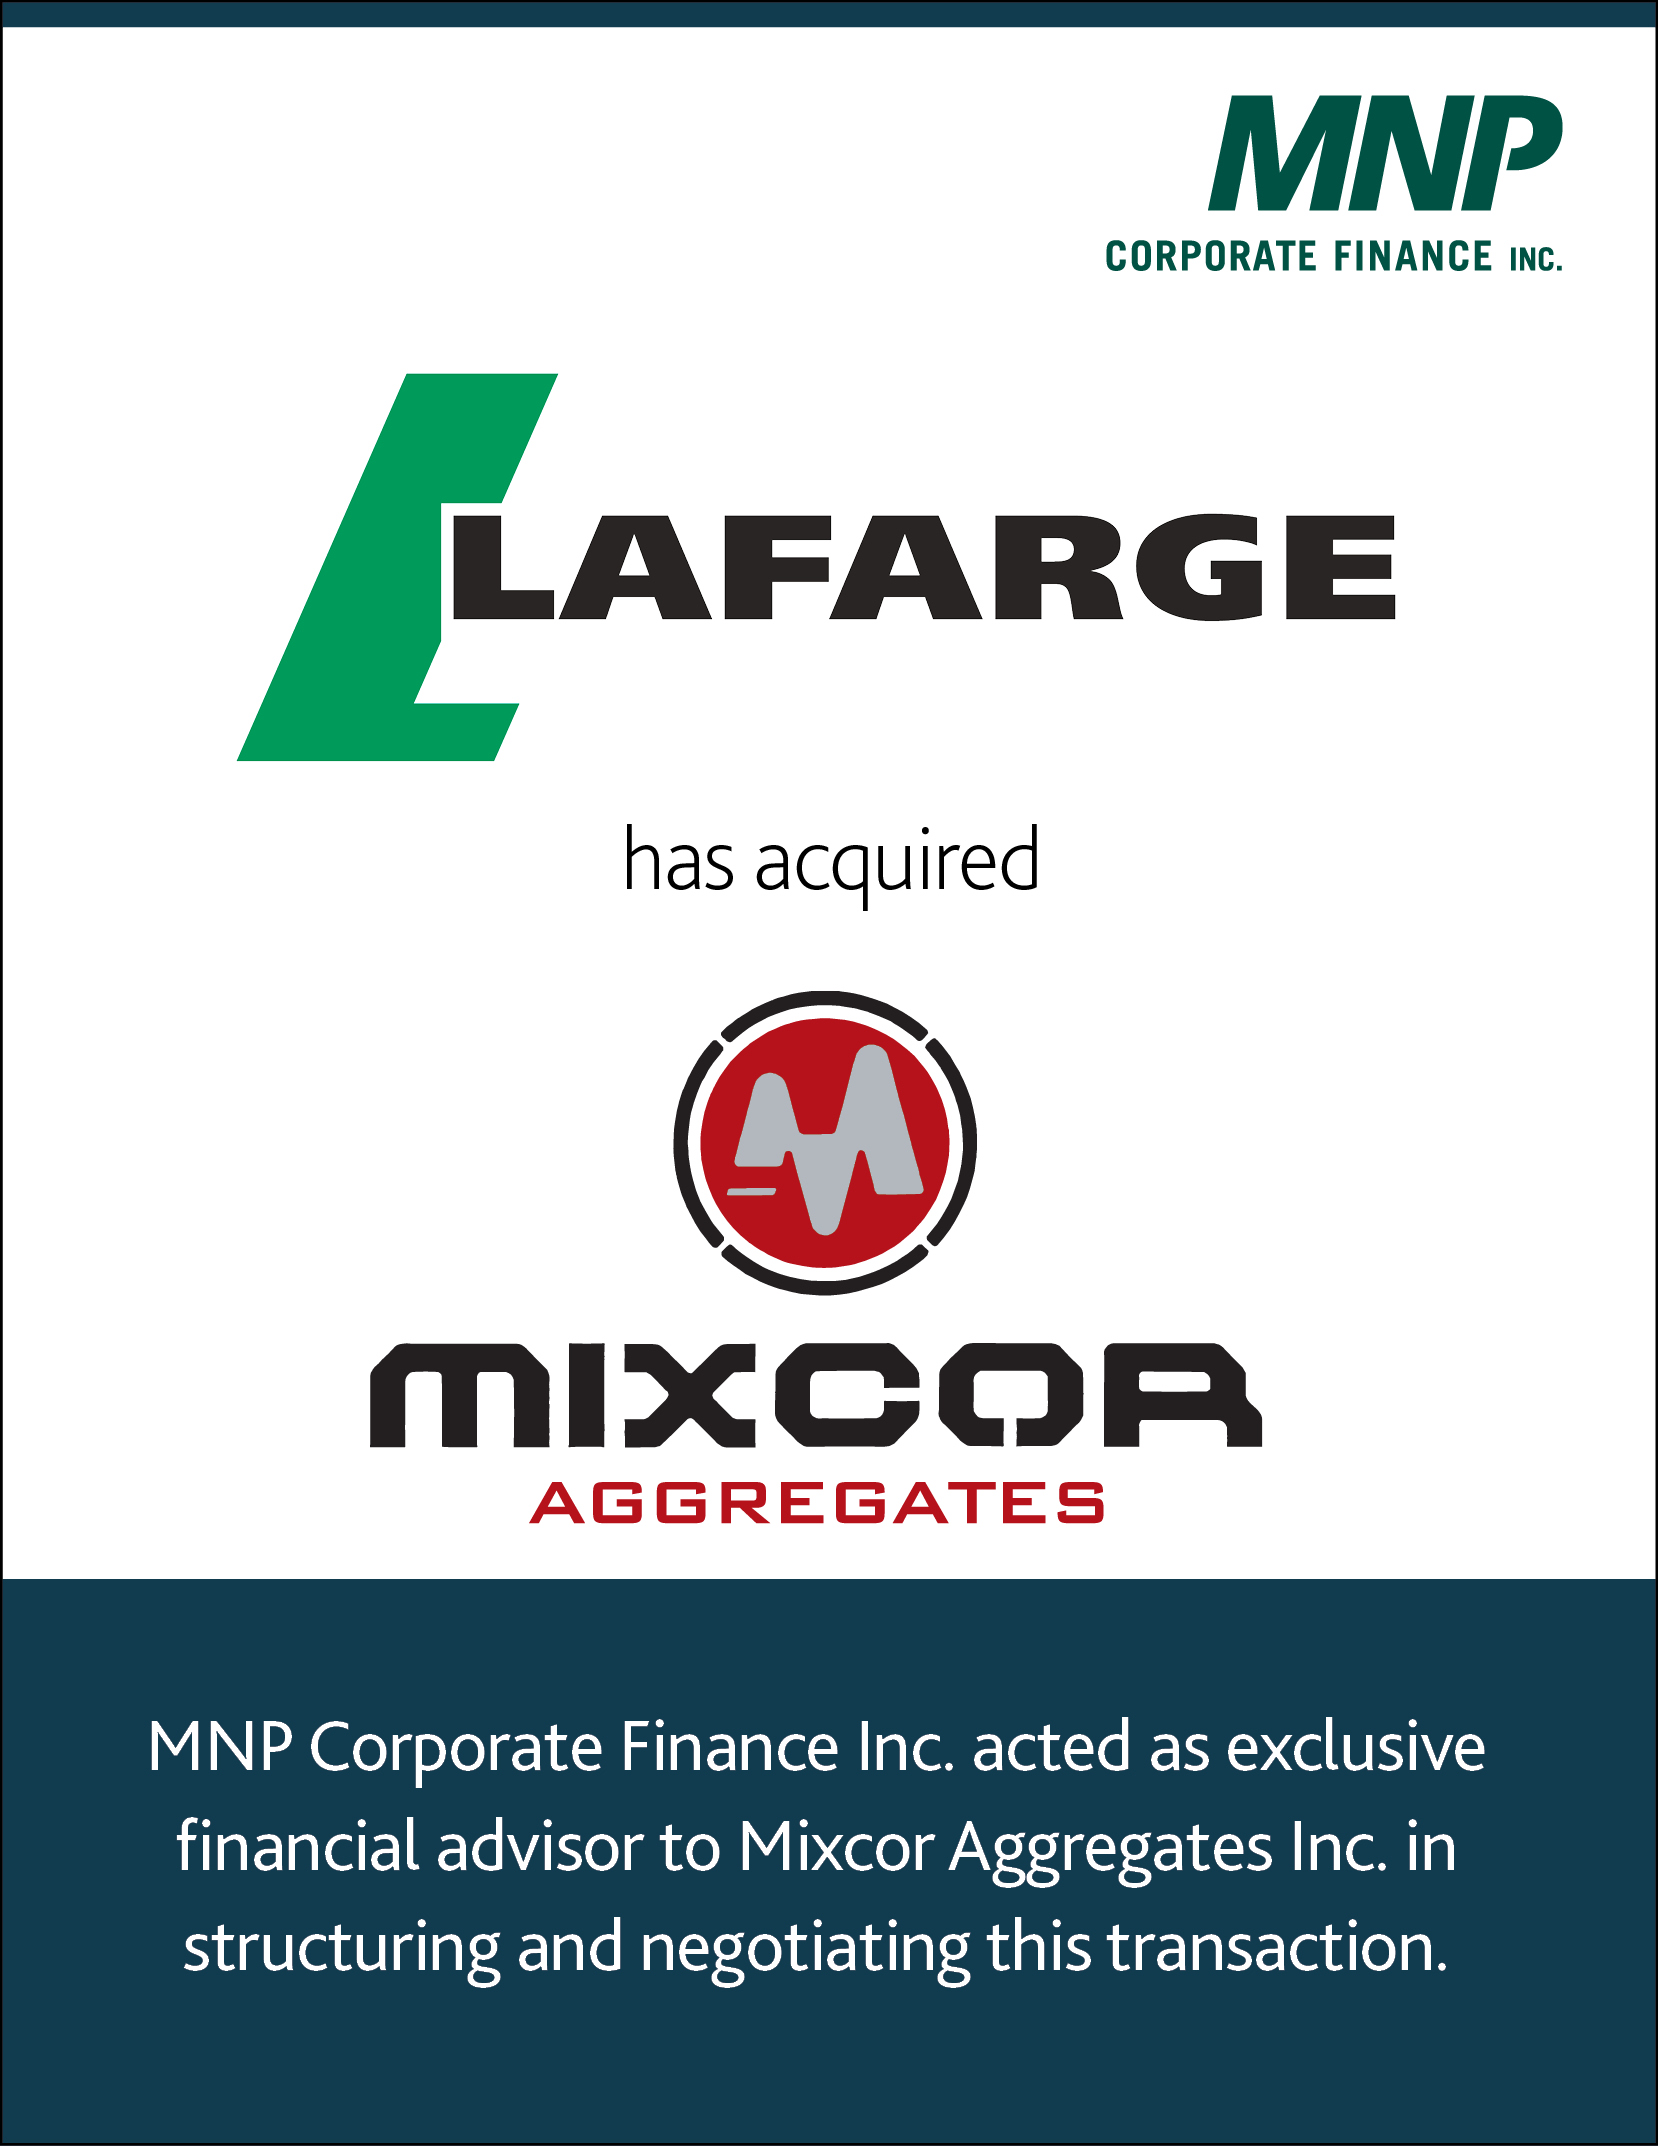 Lafarge gas acquired Mixcor Aggregates